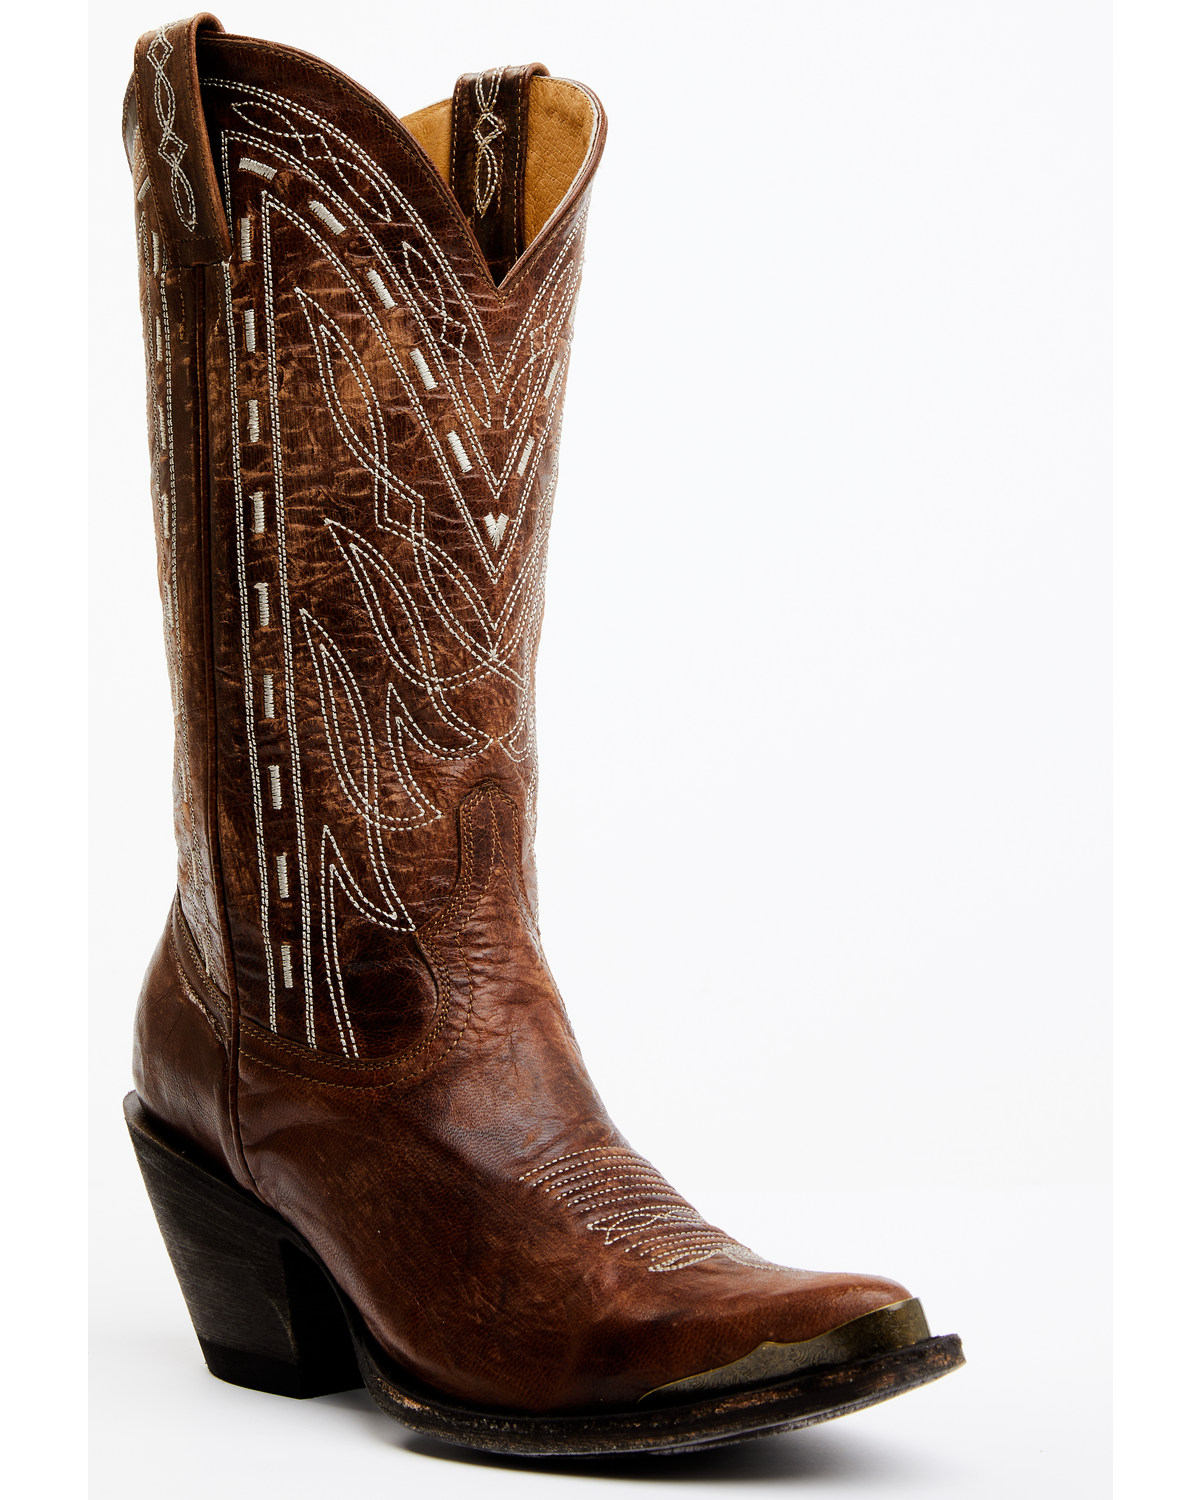 Idyllwind Women's Retro Rock Western Boots - Medium Toe